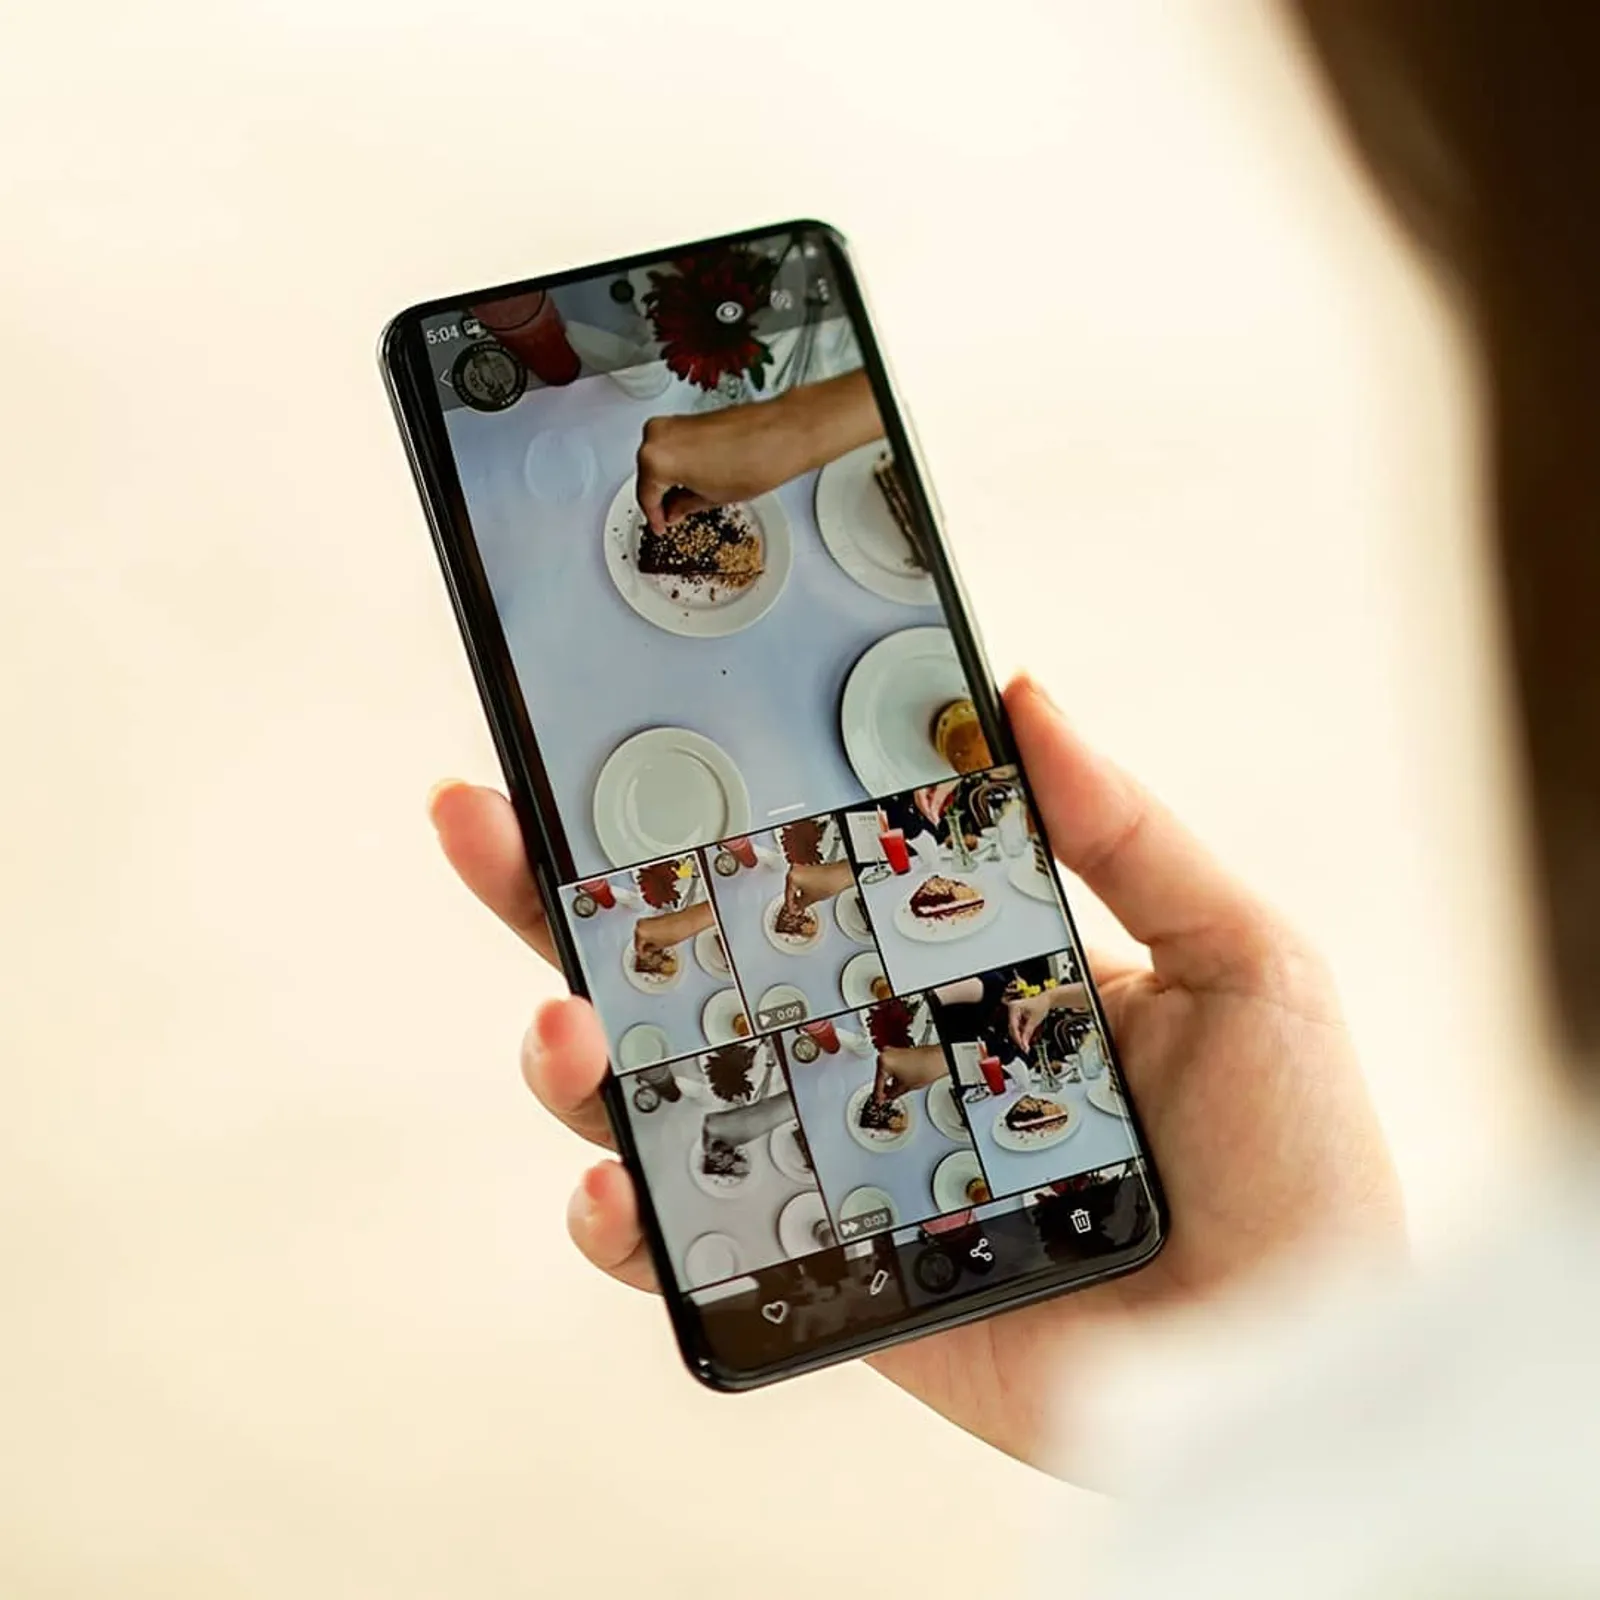 Rilis Seri Baru, Samsung Siap Jadi Pelopor Smartphone Masa Depan